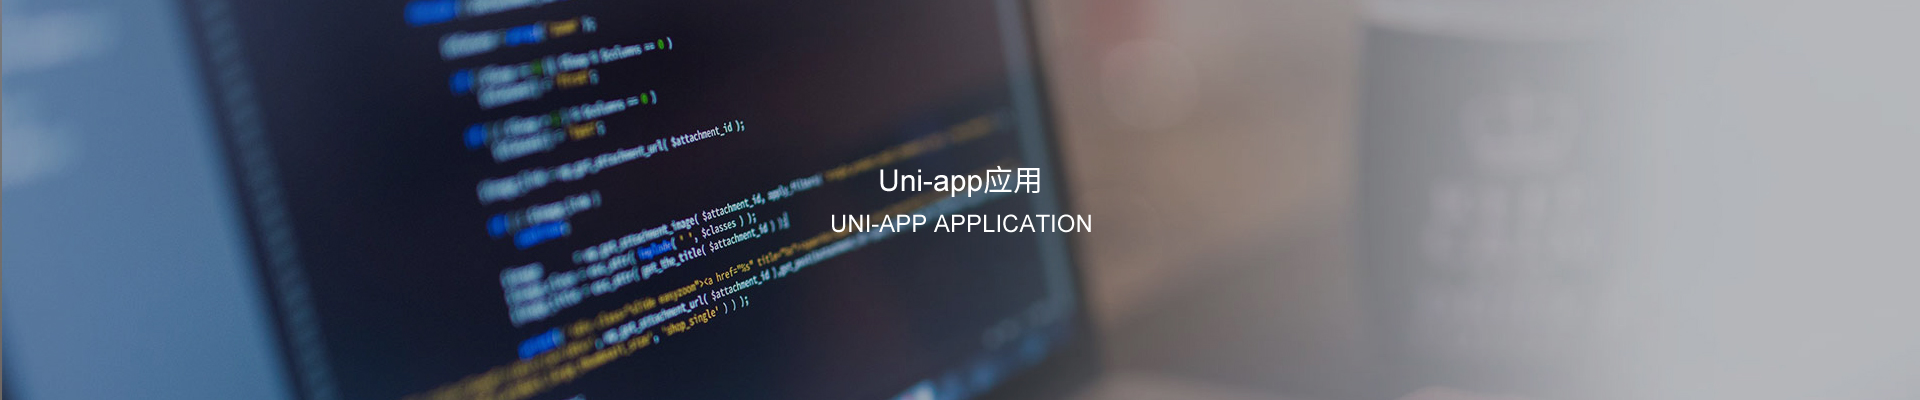 Uni-app